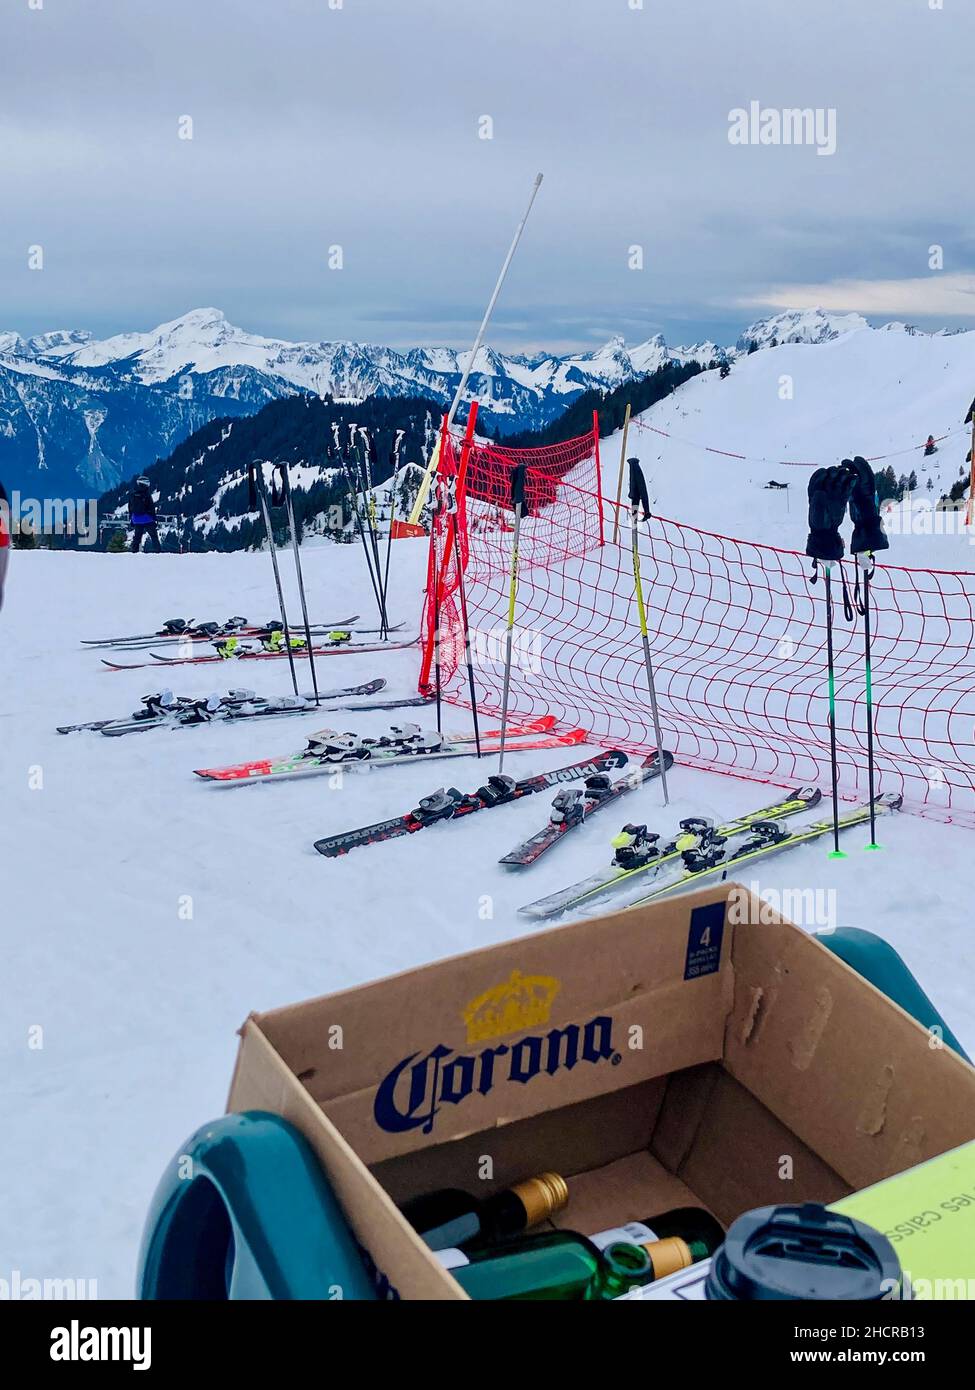 Villars sur Ollon, Schweiz - 04. Februar 2021: Corona Bierdose an einem Apres-Ski-Spot. Stockfoto